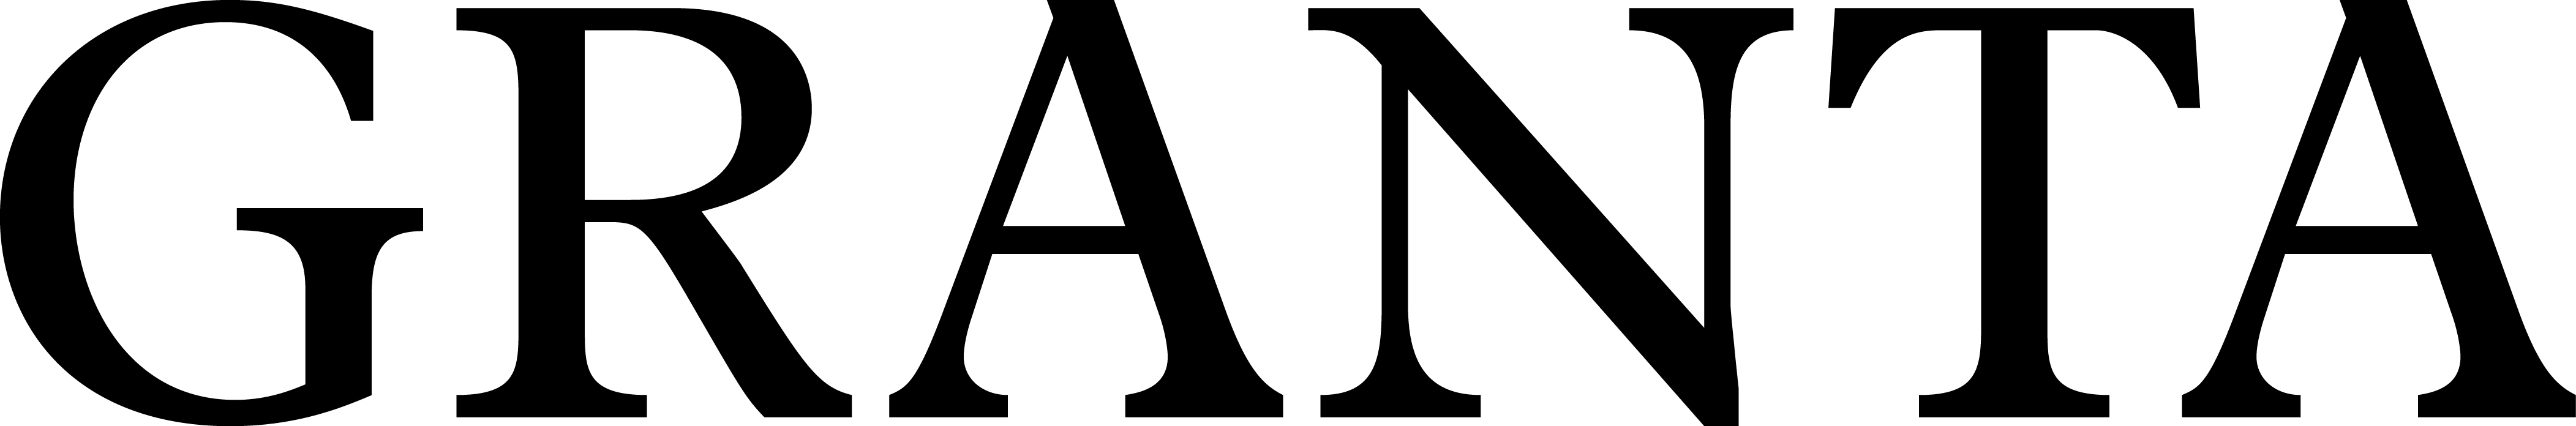 Granta Logo -  Masthead